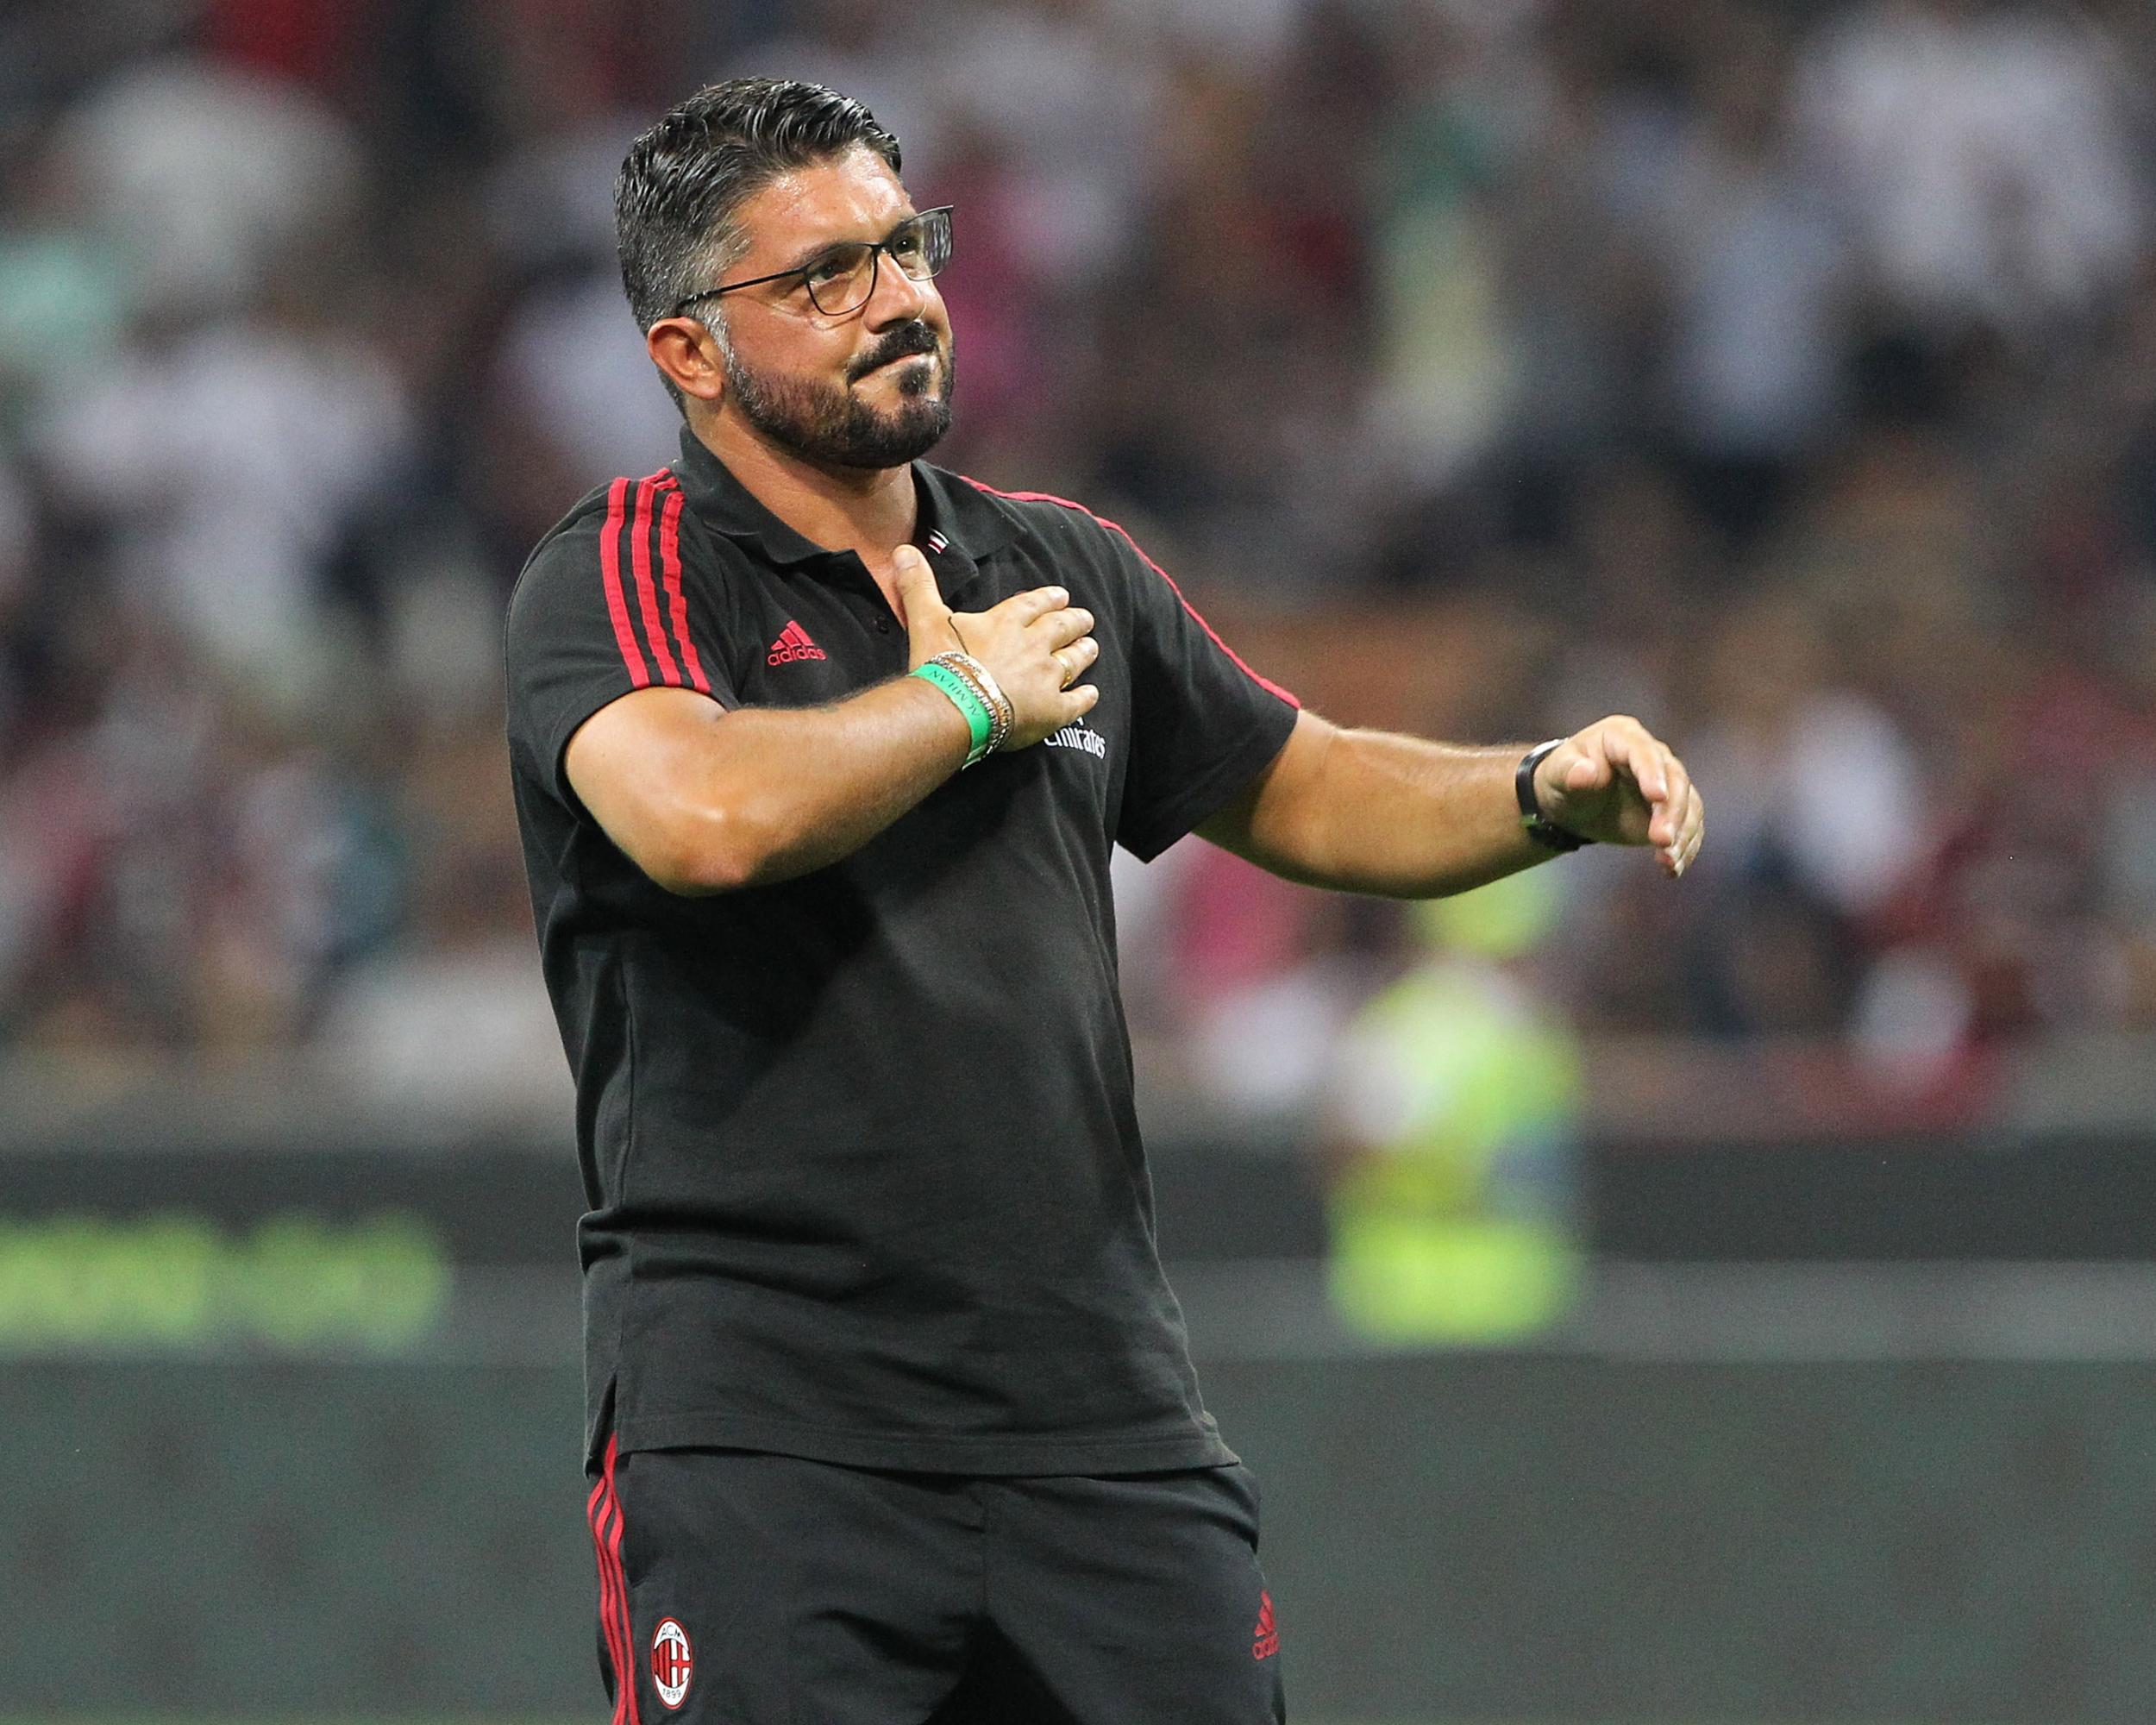 Gattuso led Milan's Primavera side to third in their table